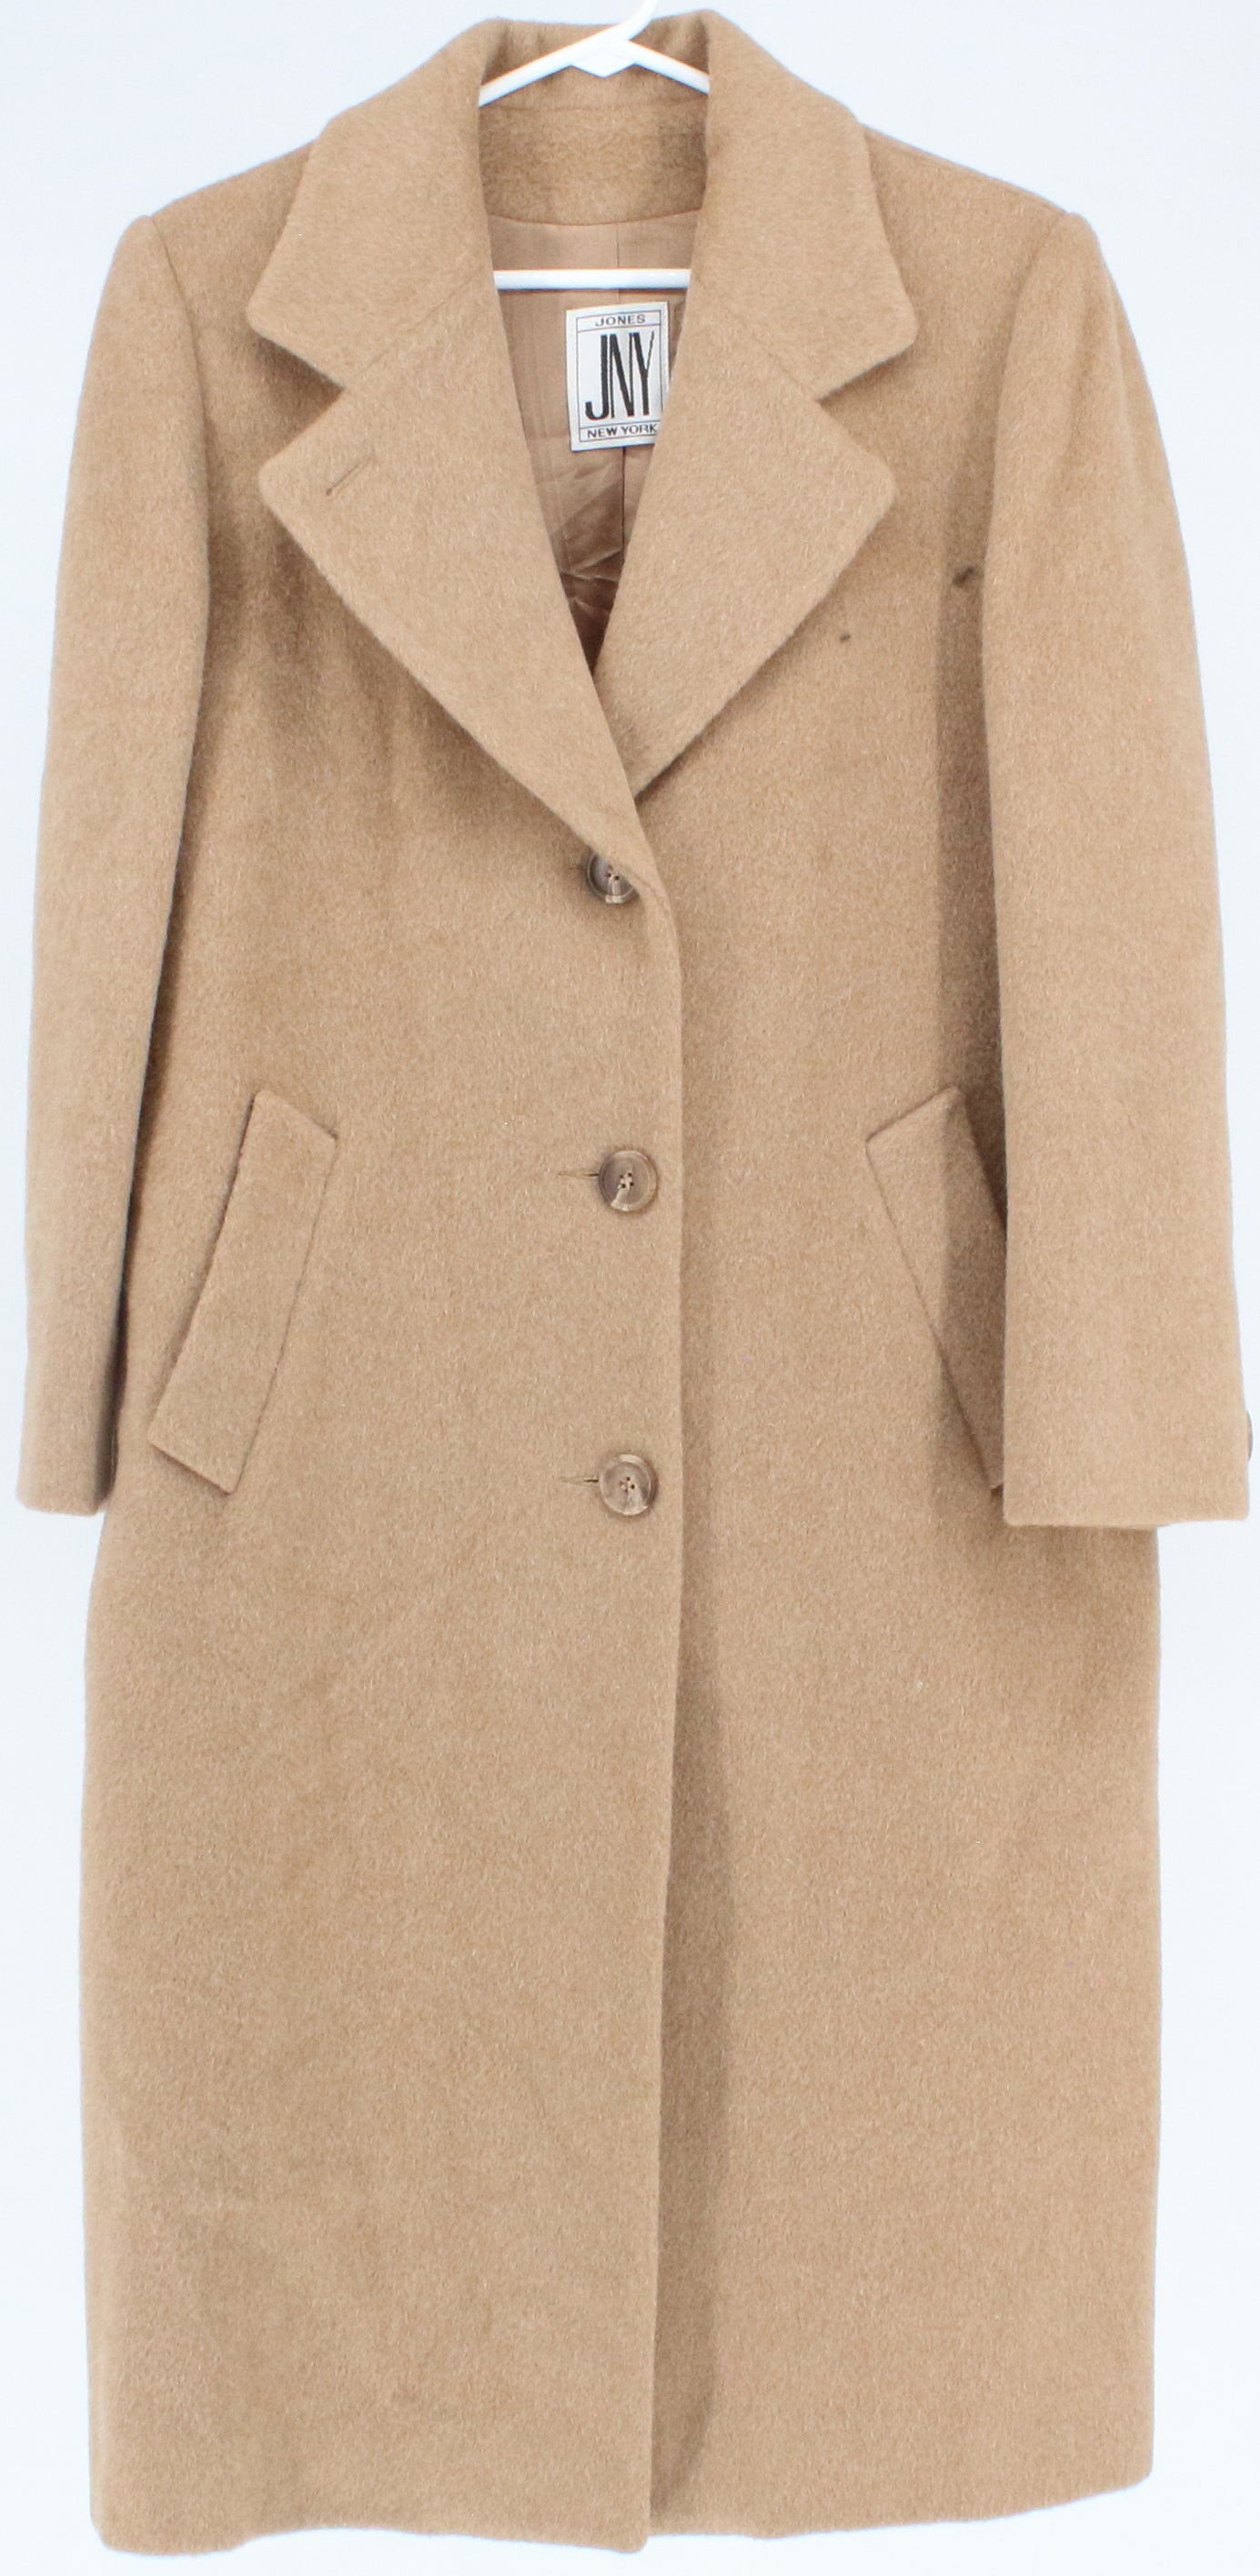 JNY Jones New York Black Long 100% Pure Wool Coat Jacket Women